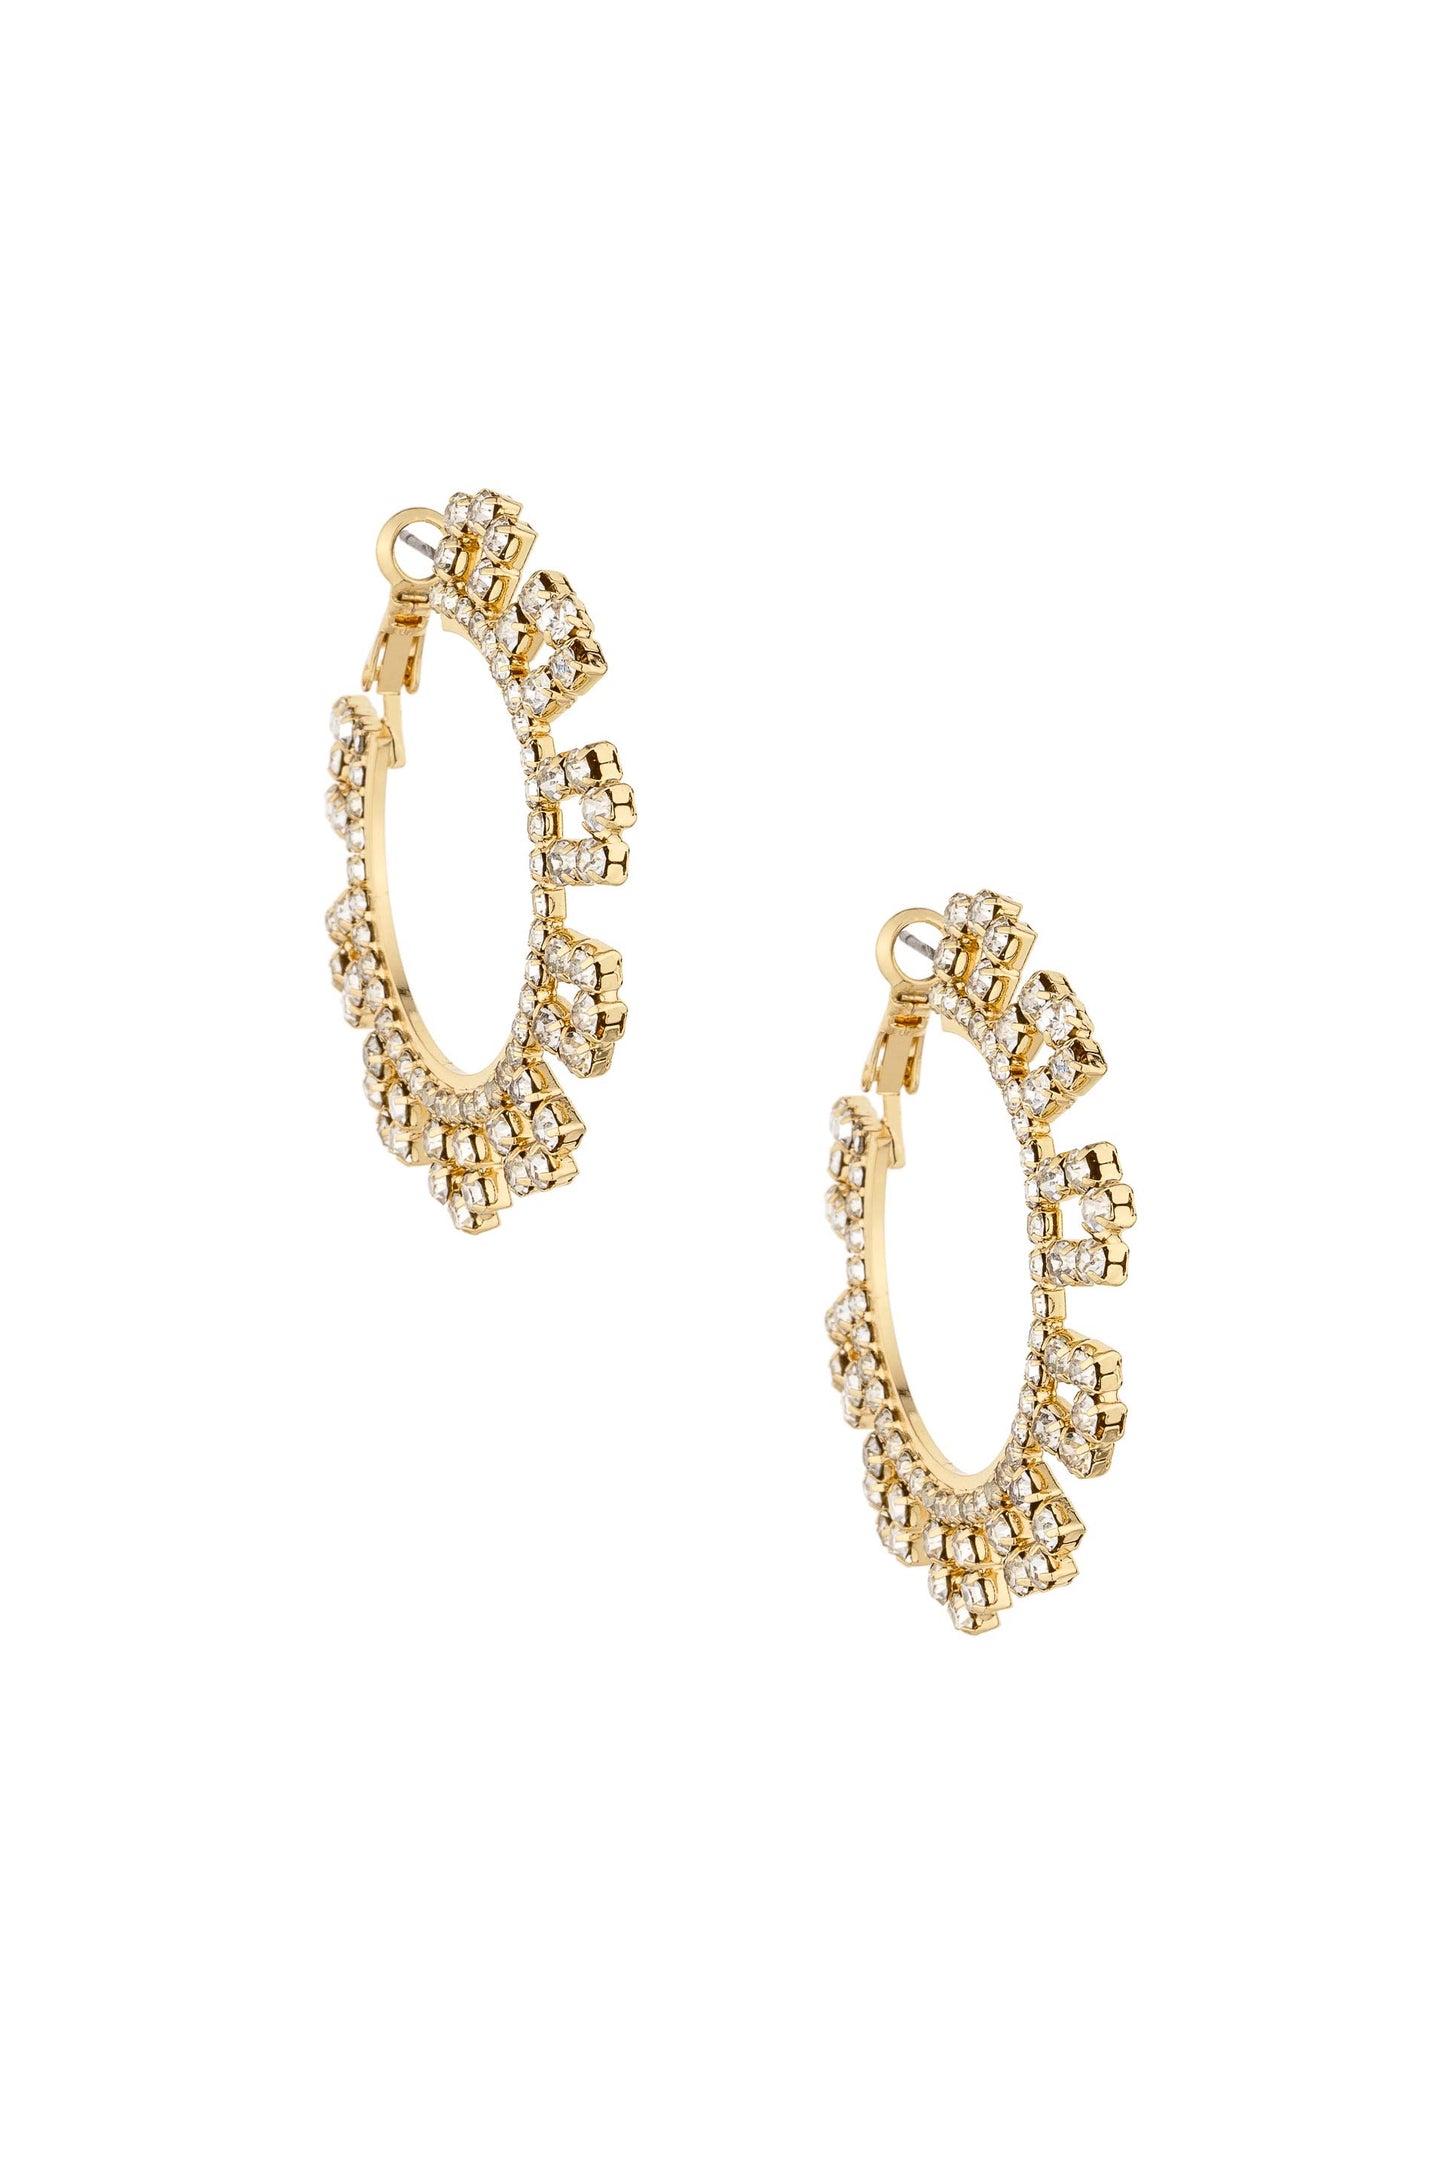 Gatsby Crystal 18k Gold Plated Hoop Earrings on white